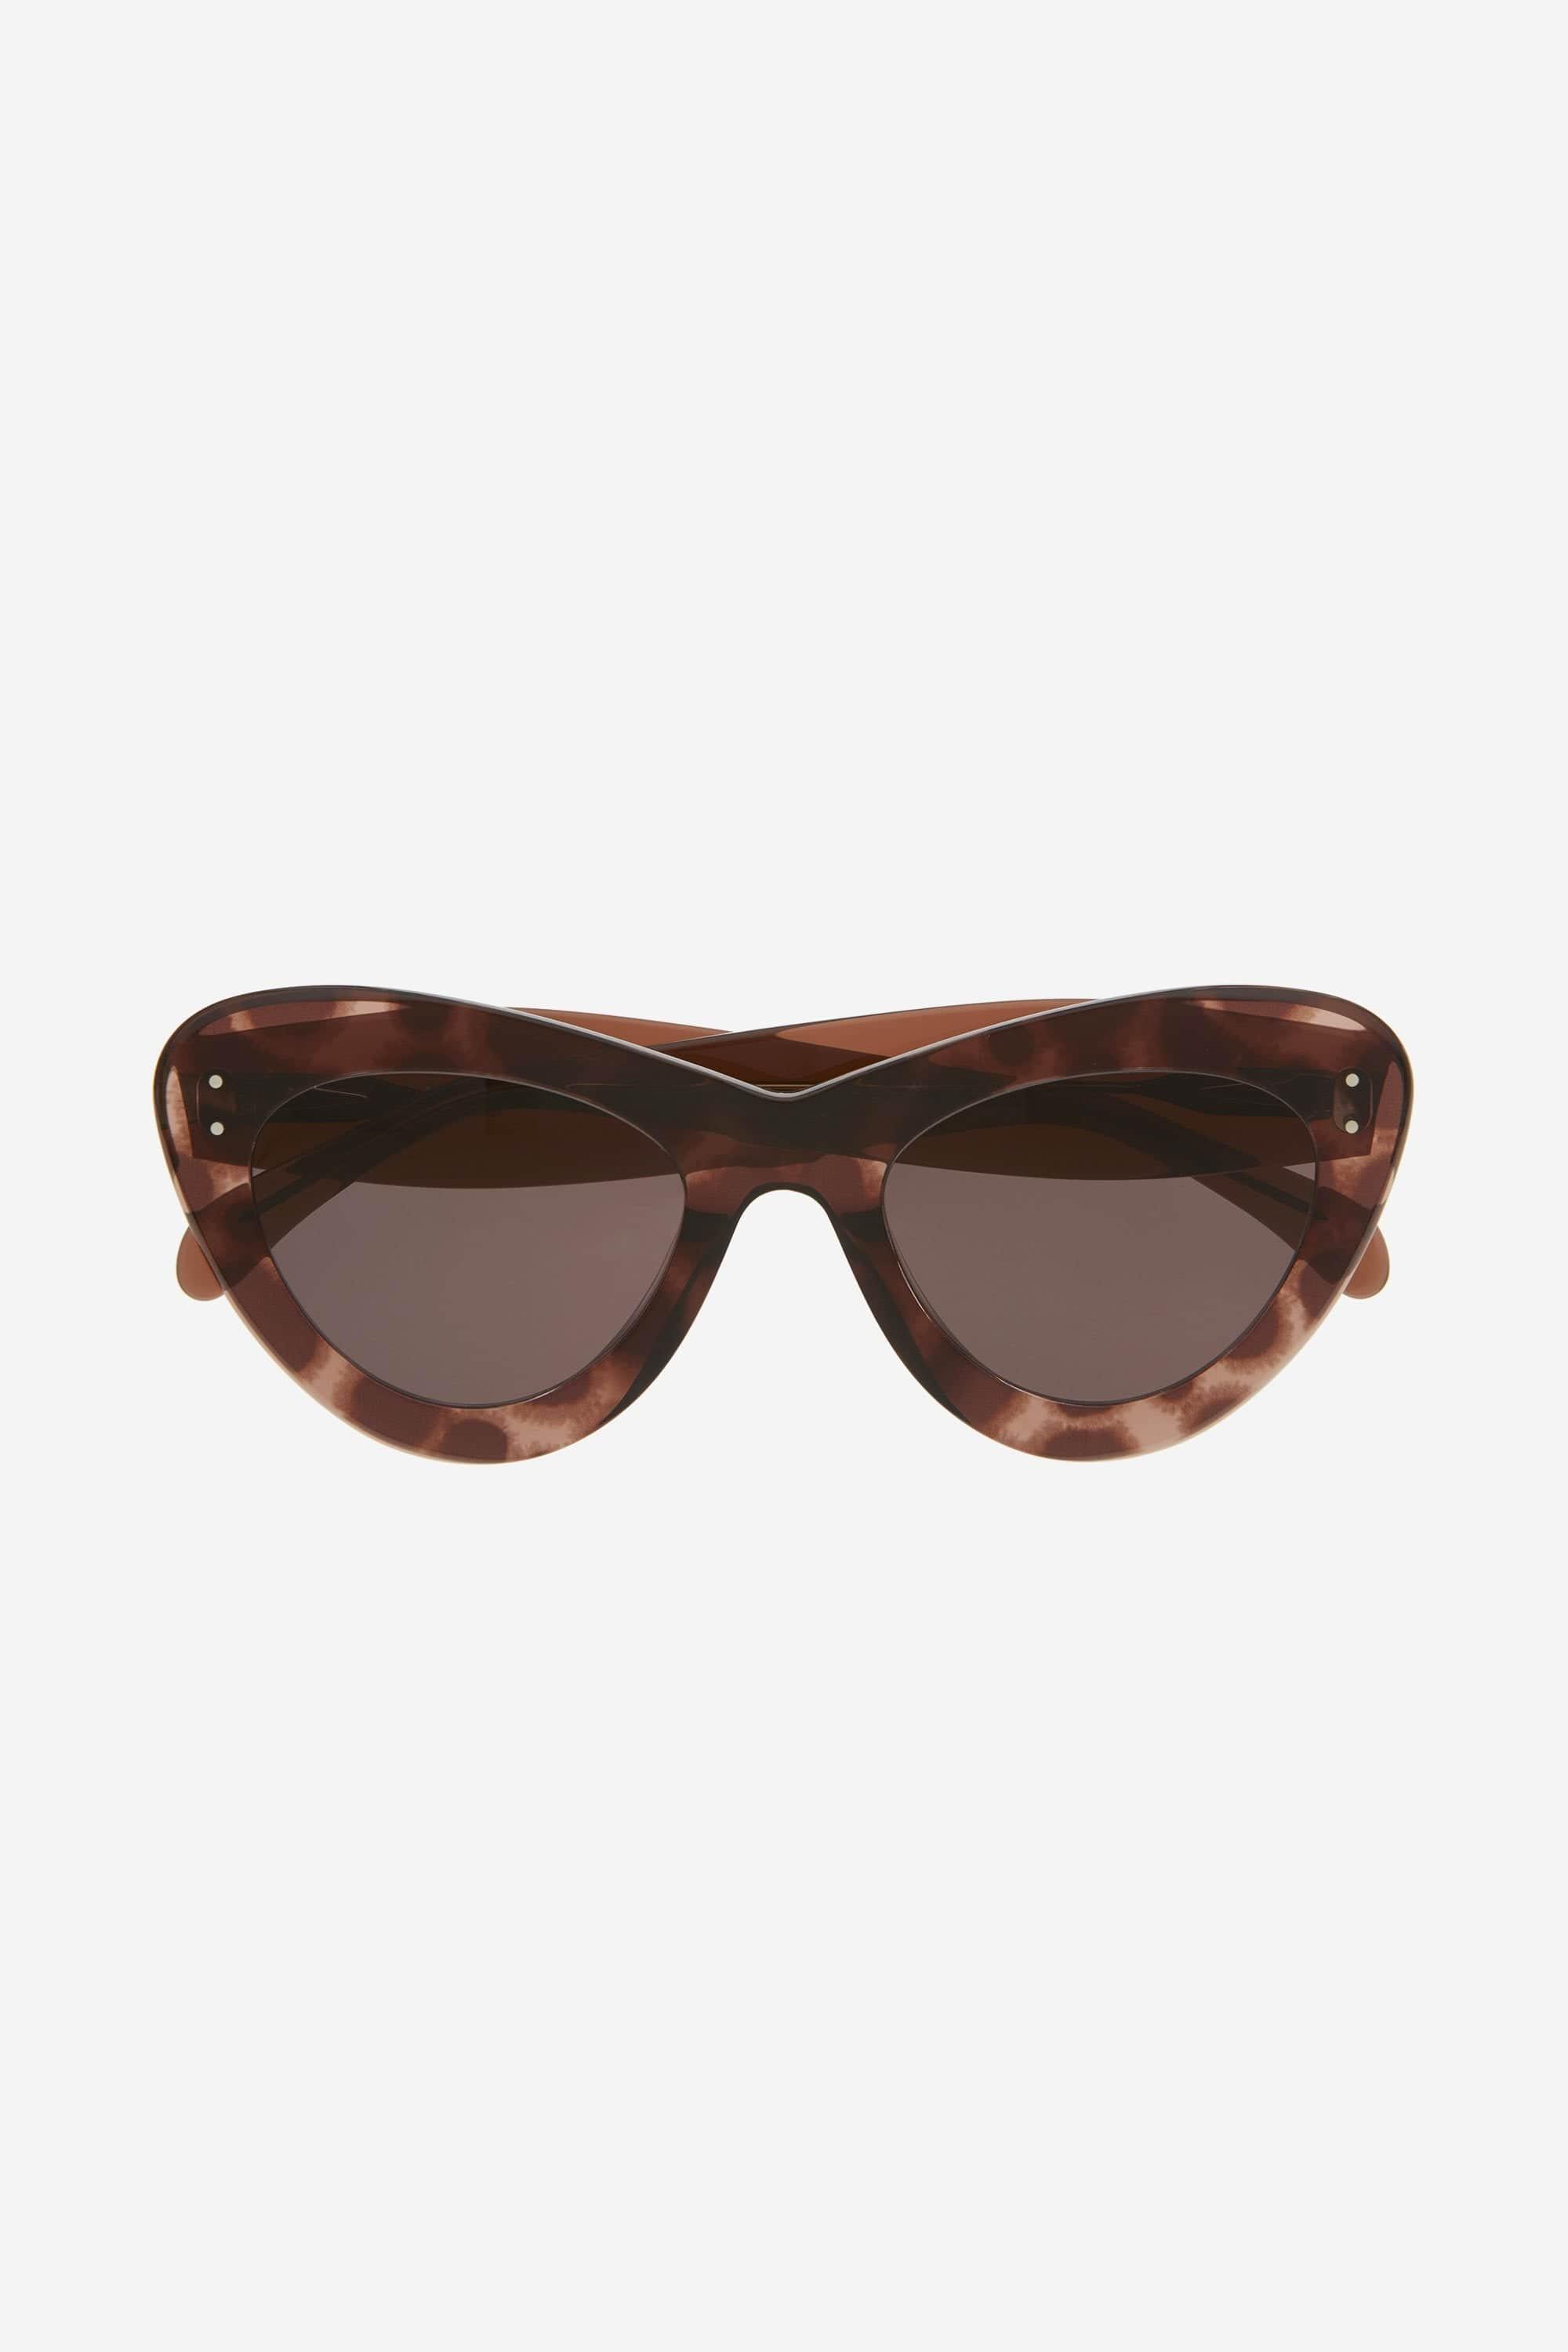 Alaïa Oversized Brown Cat-eye Sunglasses | Lyst